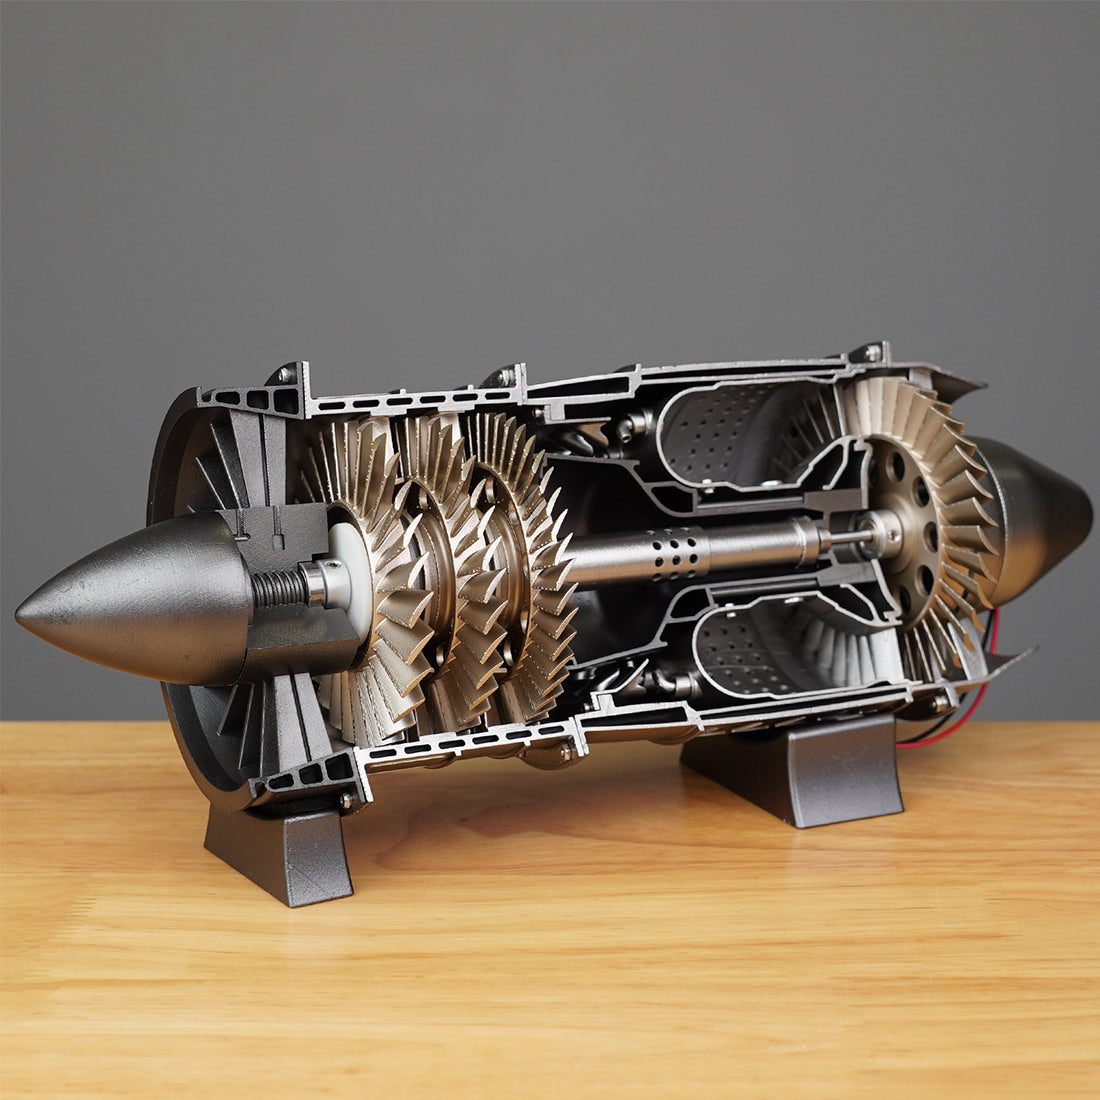 WP-85 Working DIY Assembly Turbojet Engine Kits That Runs 3D Printing Simulation - stirlingkit